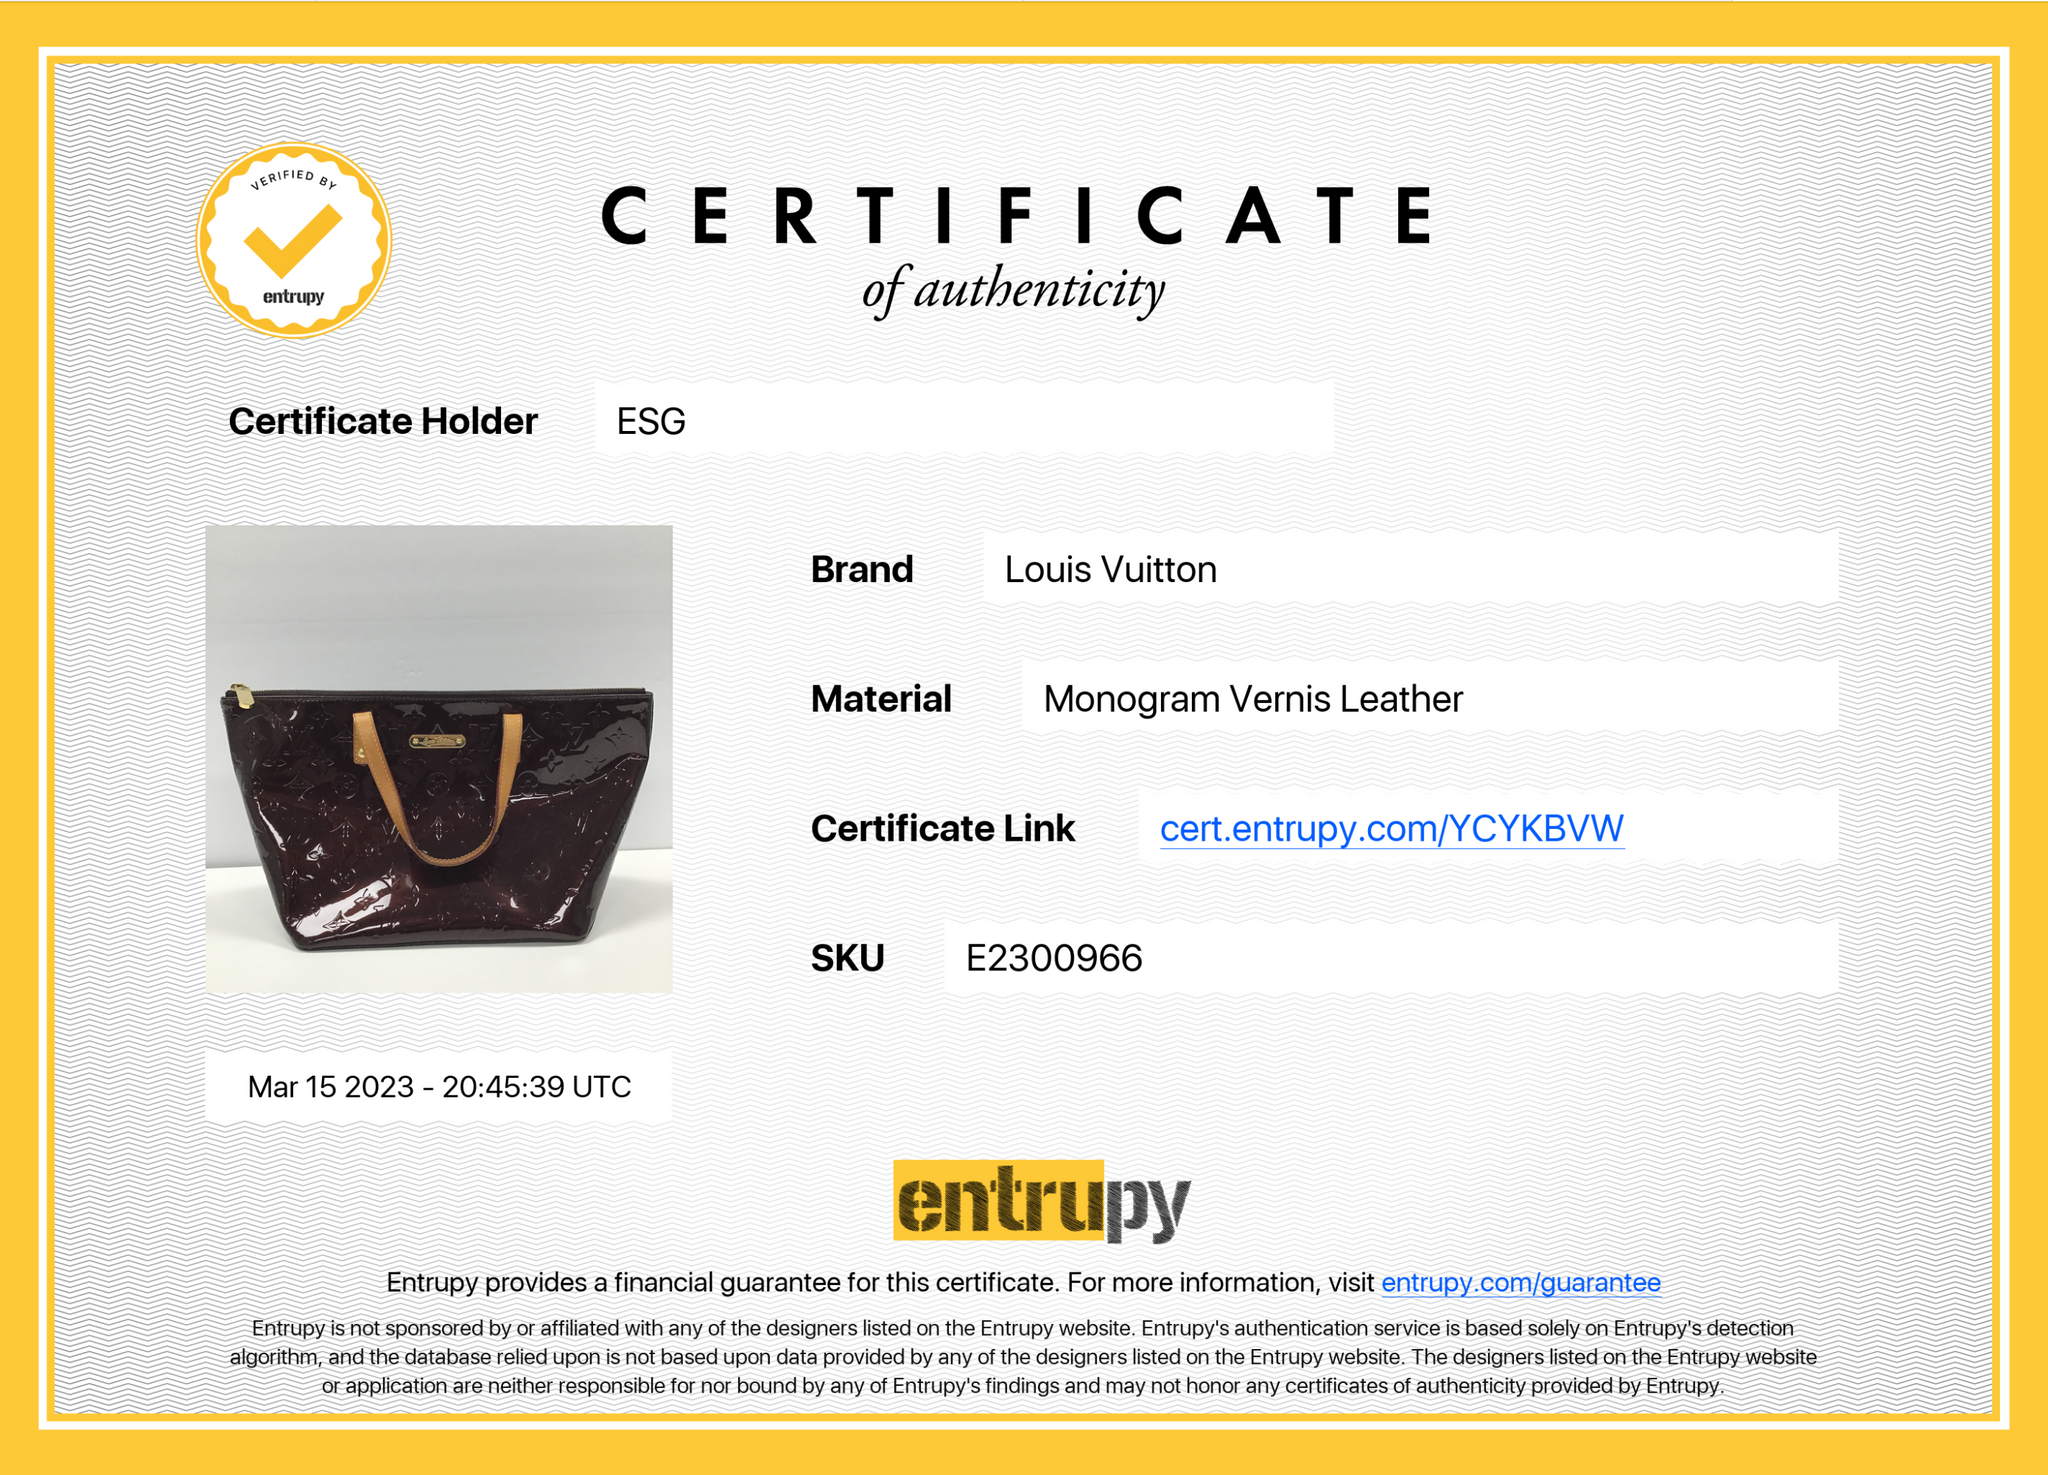 Louis Vuitton Amarante Monogram Vernis Bellevue PM Bag